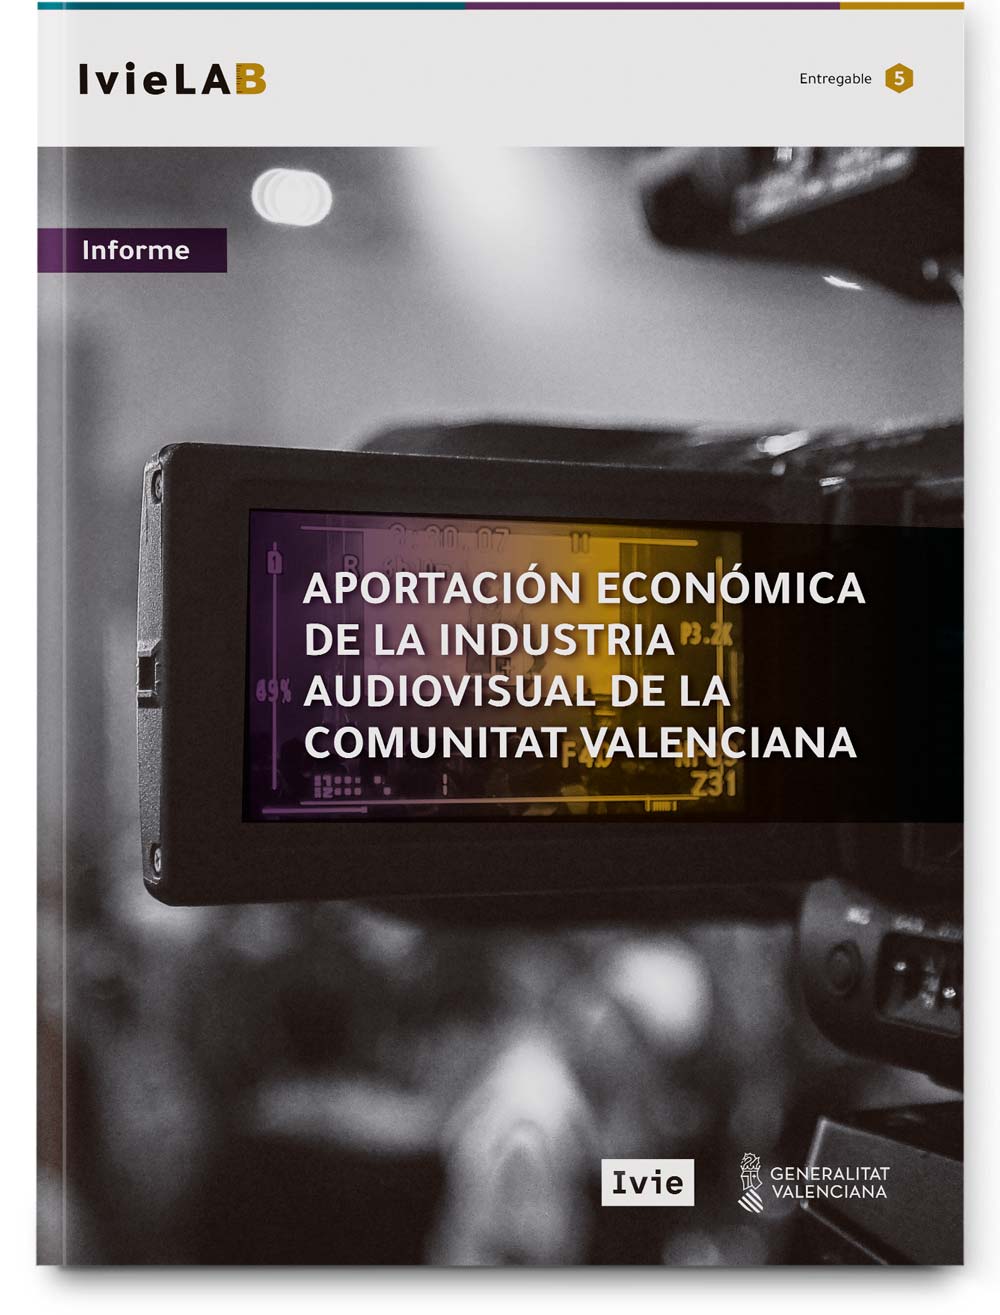 Economic contribution of the Valencian Community’s audiovisual industry